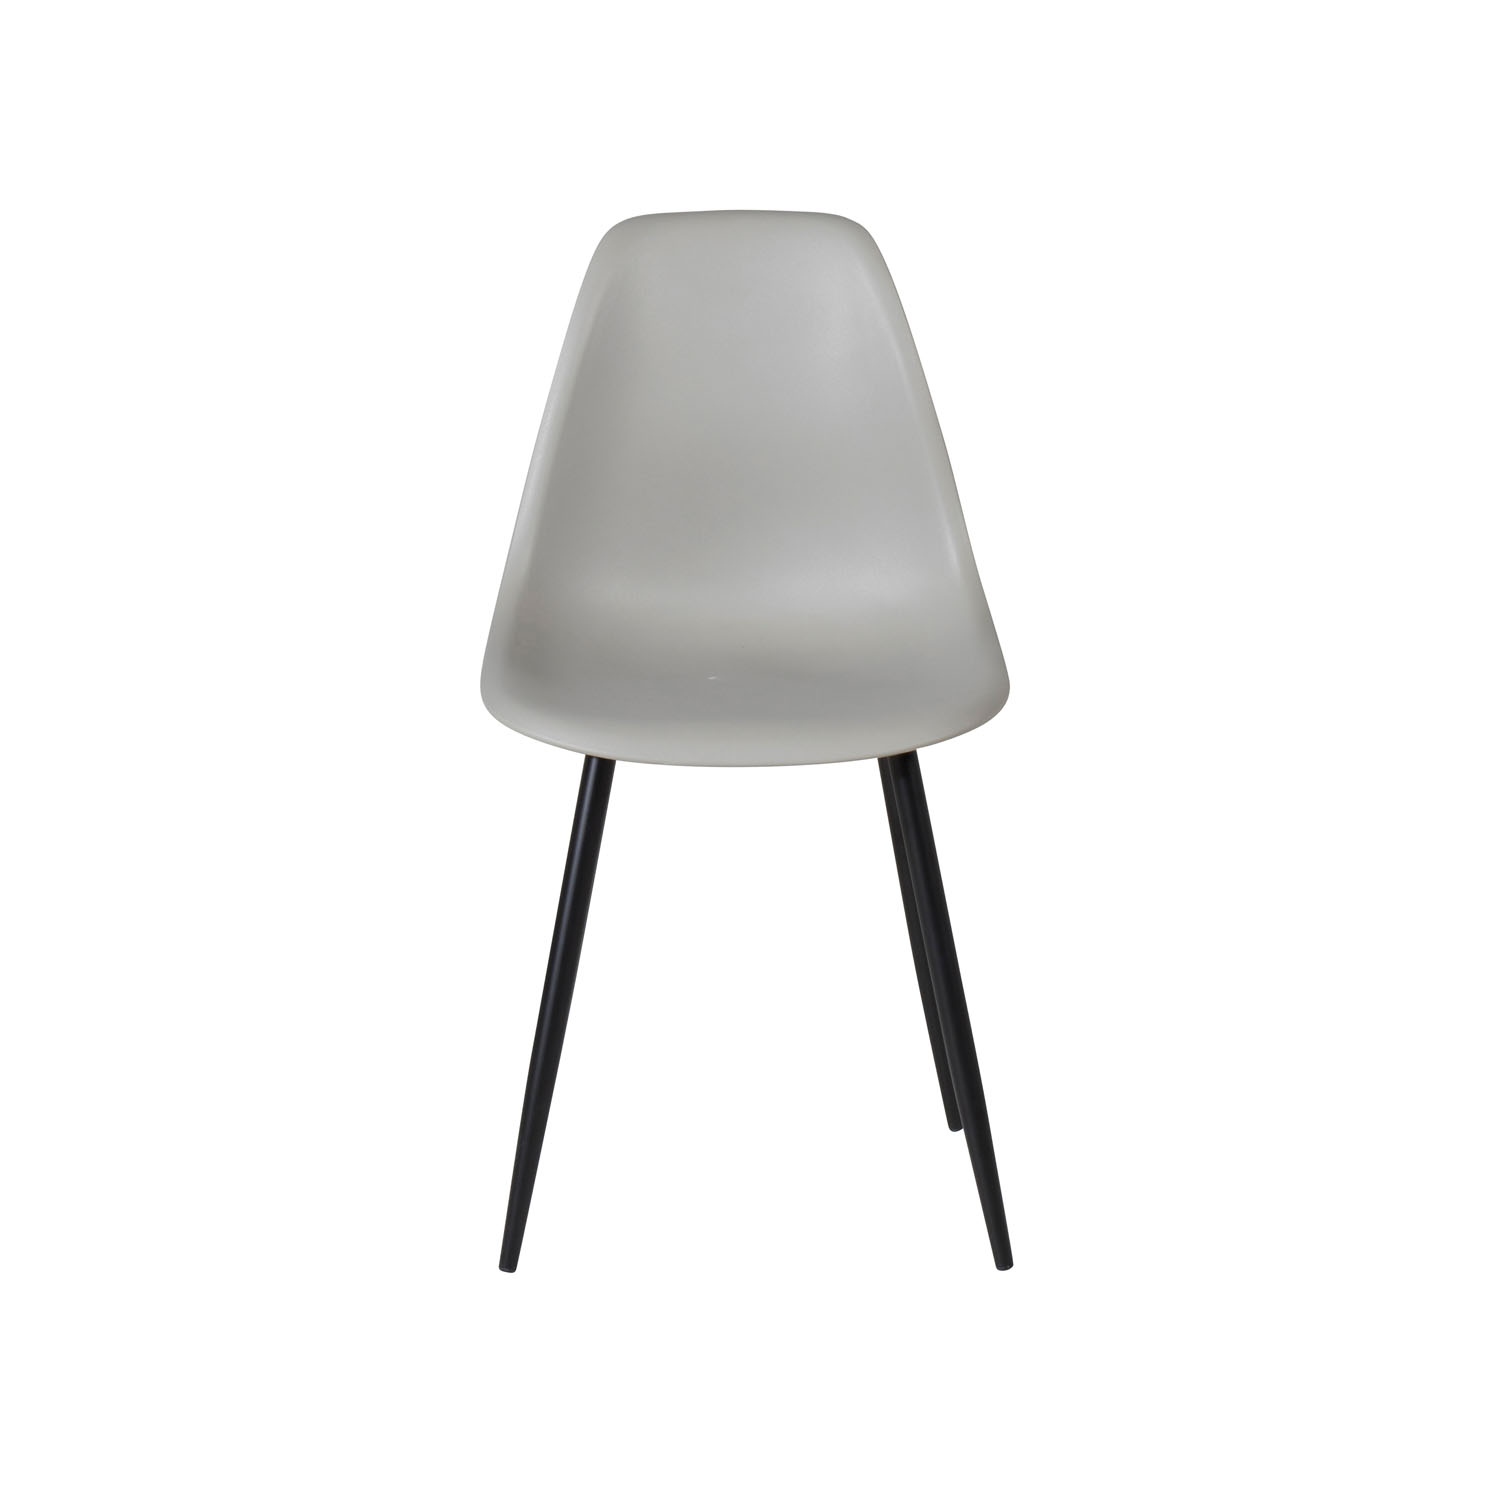 VENTURE DESIGN Polar Plastic spisebordsstol  grå plastik og sort metal